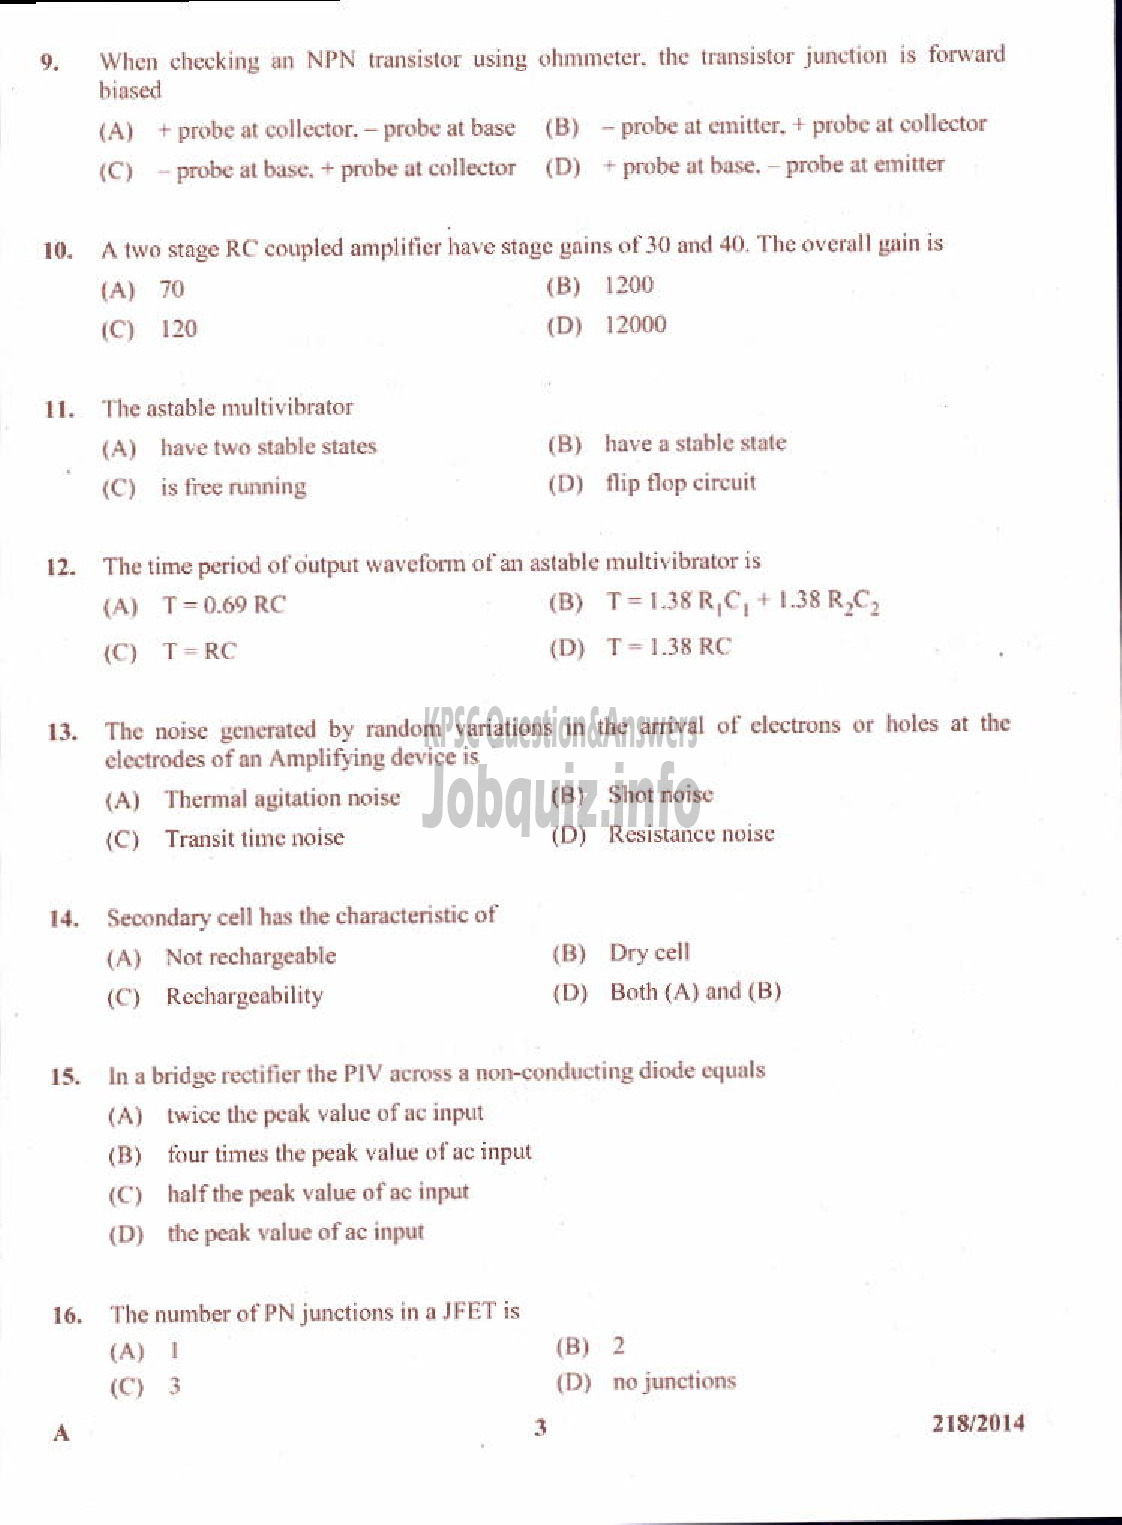 Kerala PSC Question Paper - LABORATORY TECHNICAL ASSISTANT MRRTV VHSE-3